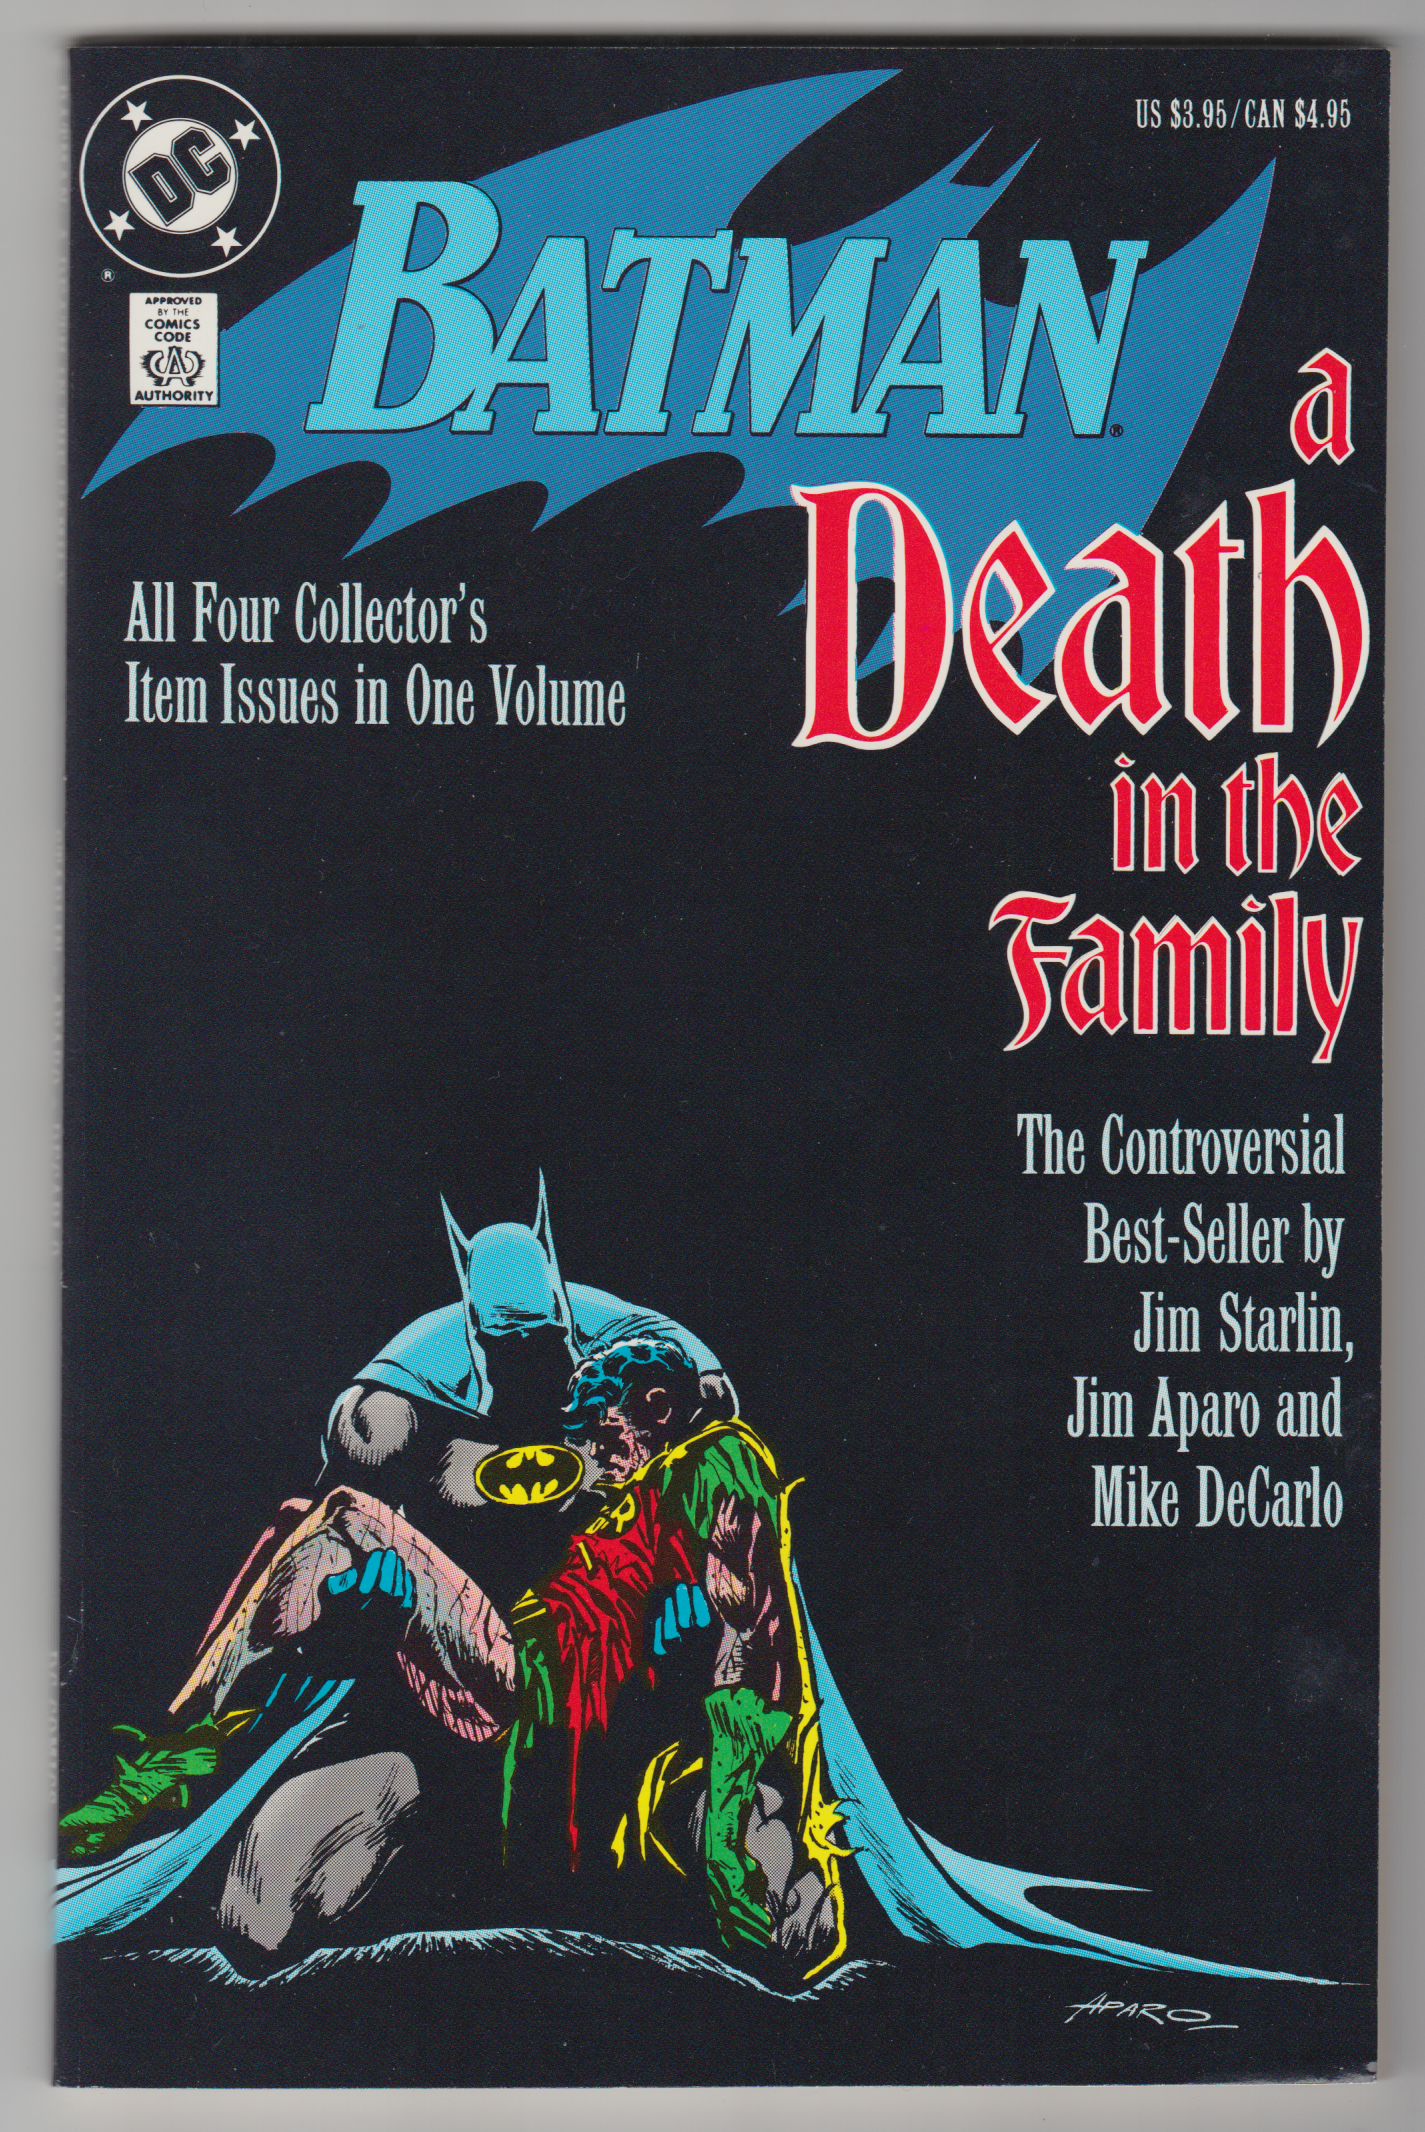 Бэтмен смерть в семье комикс 1988. Batman Death in the Family комикс. Batman death in the family